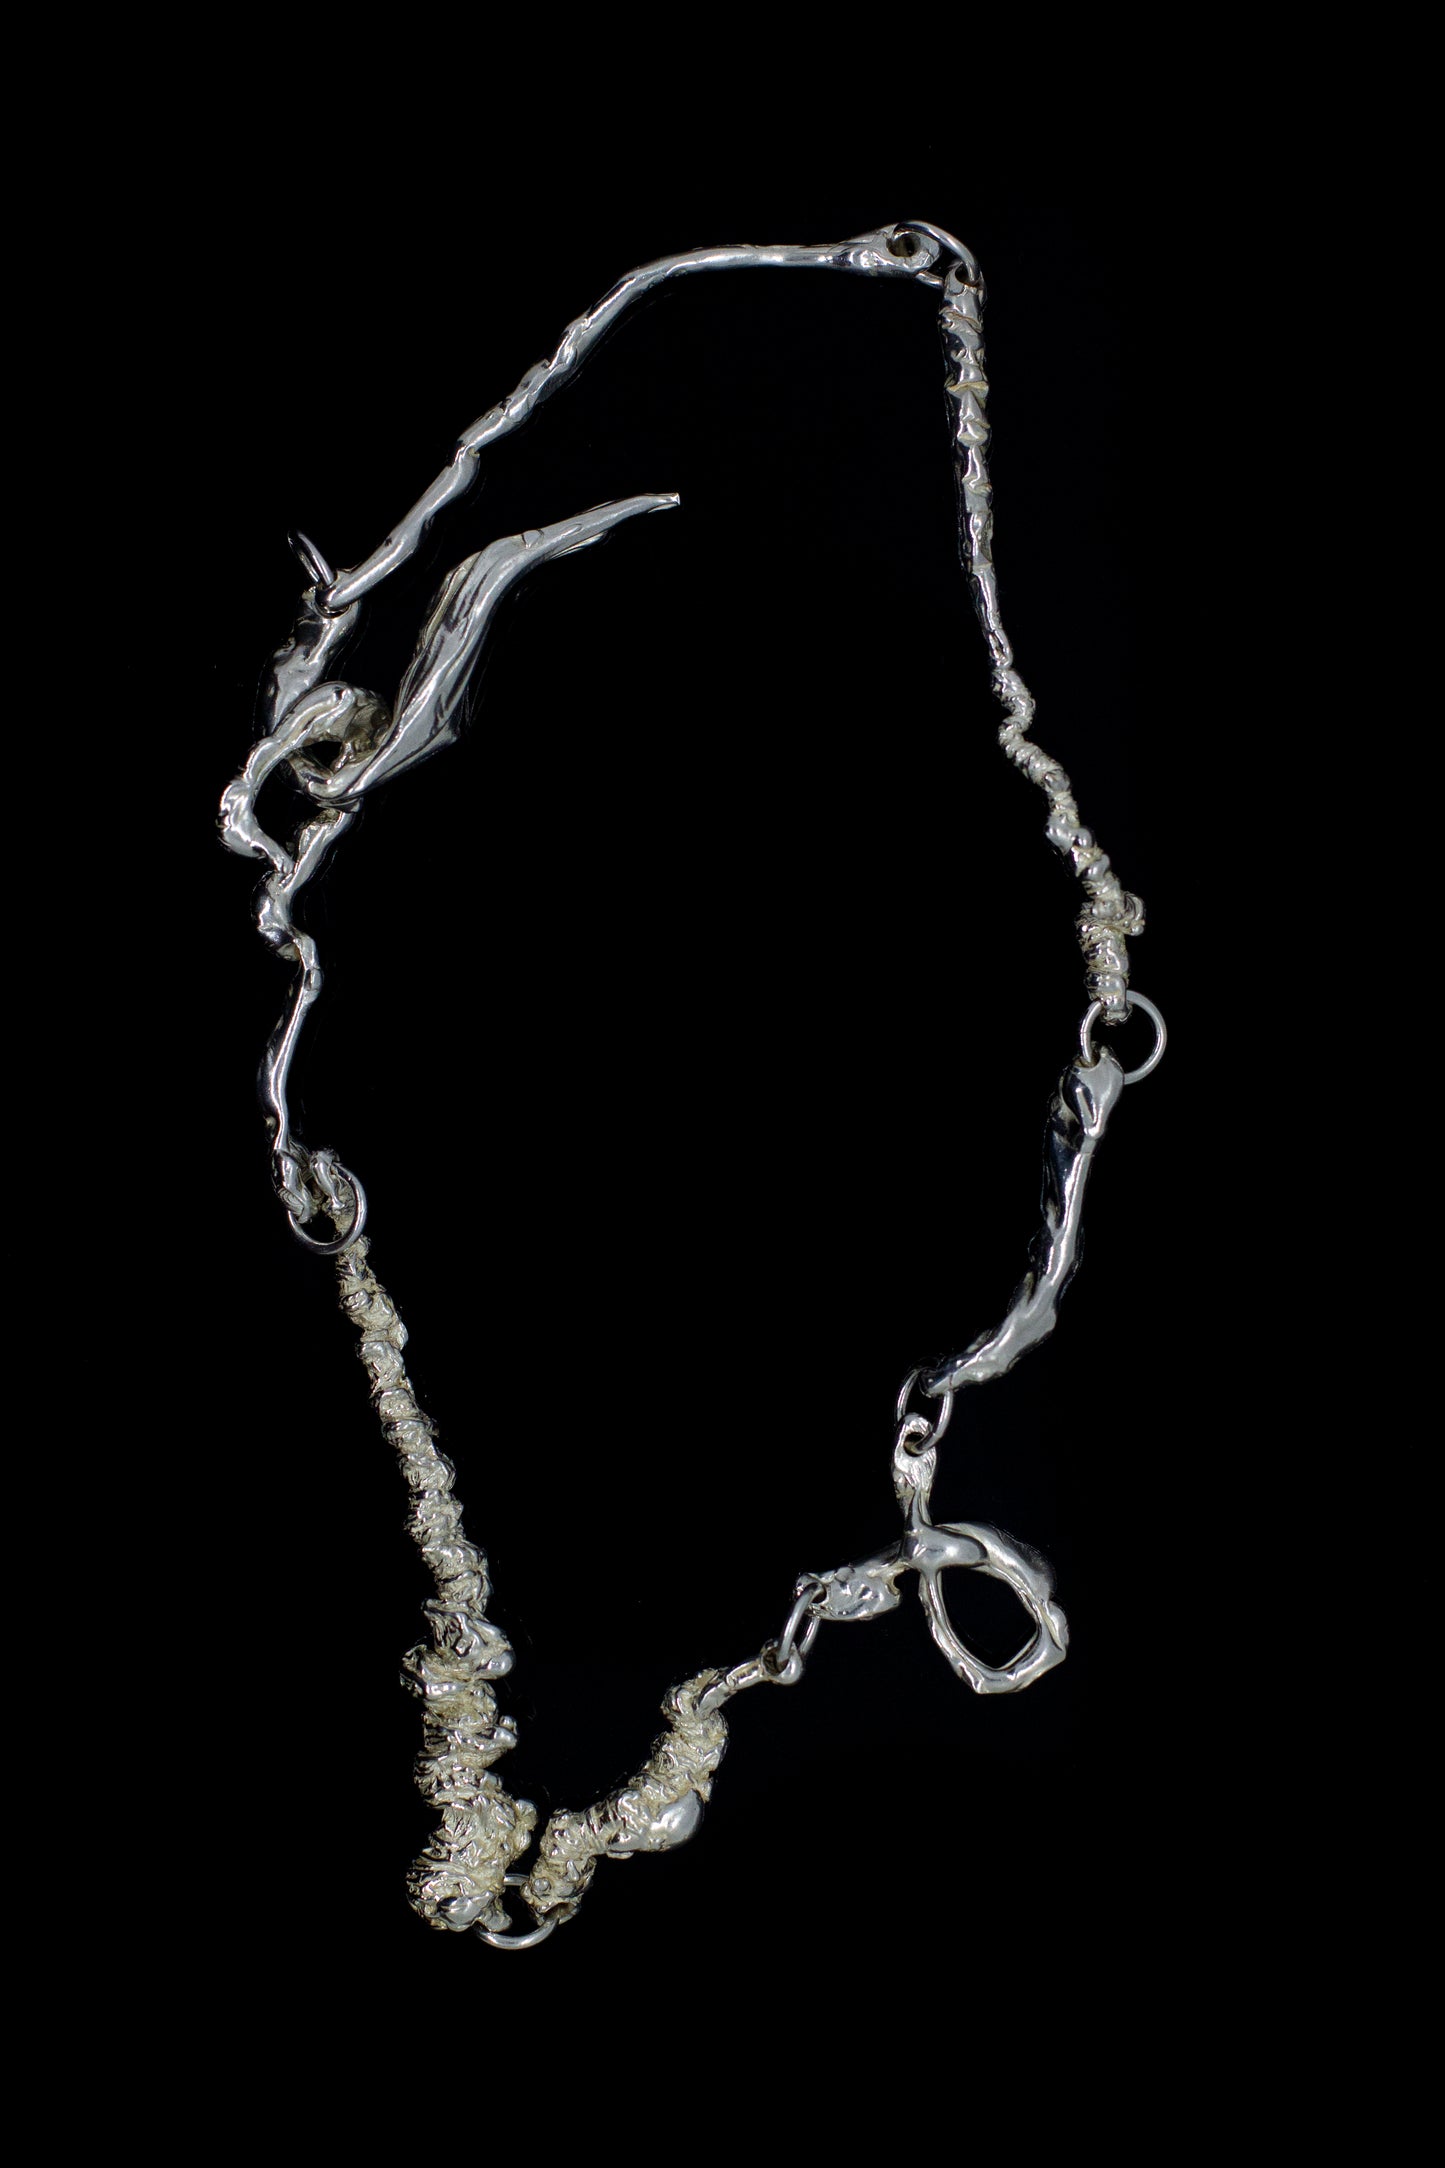 Bespoke 16" Curdled Chain